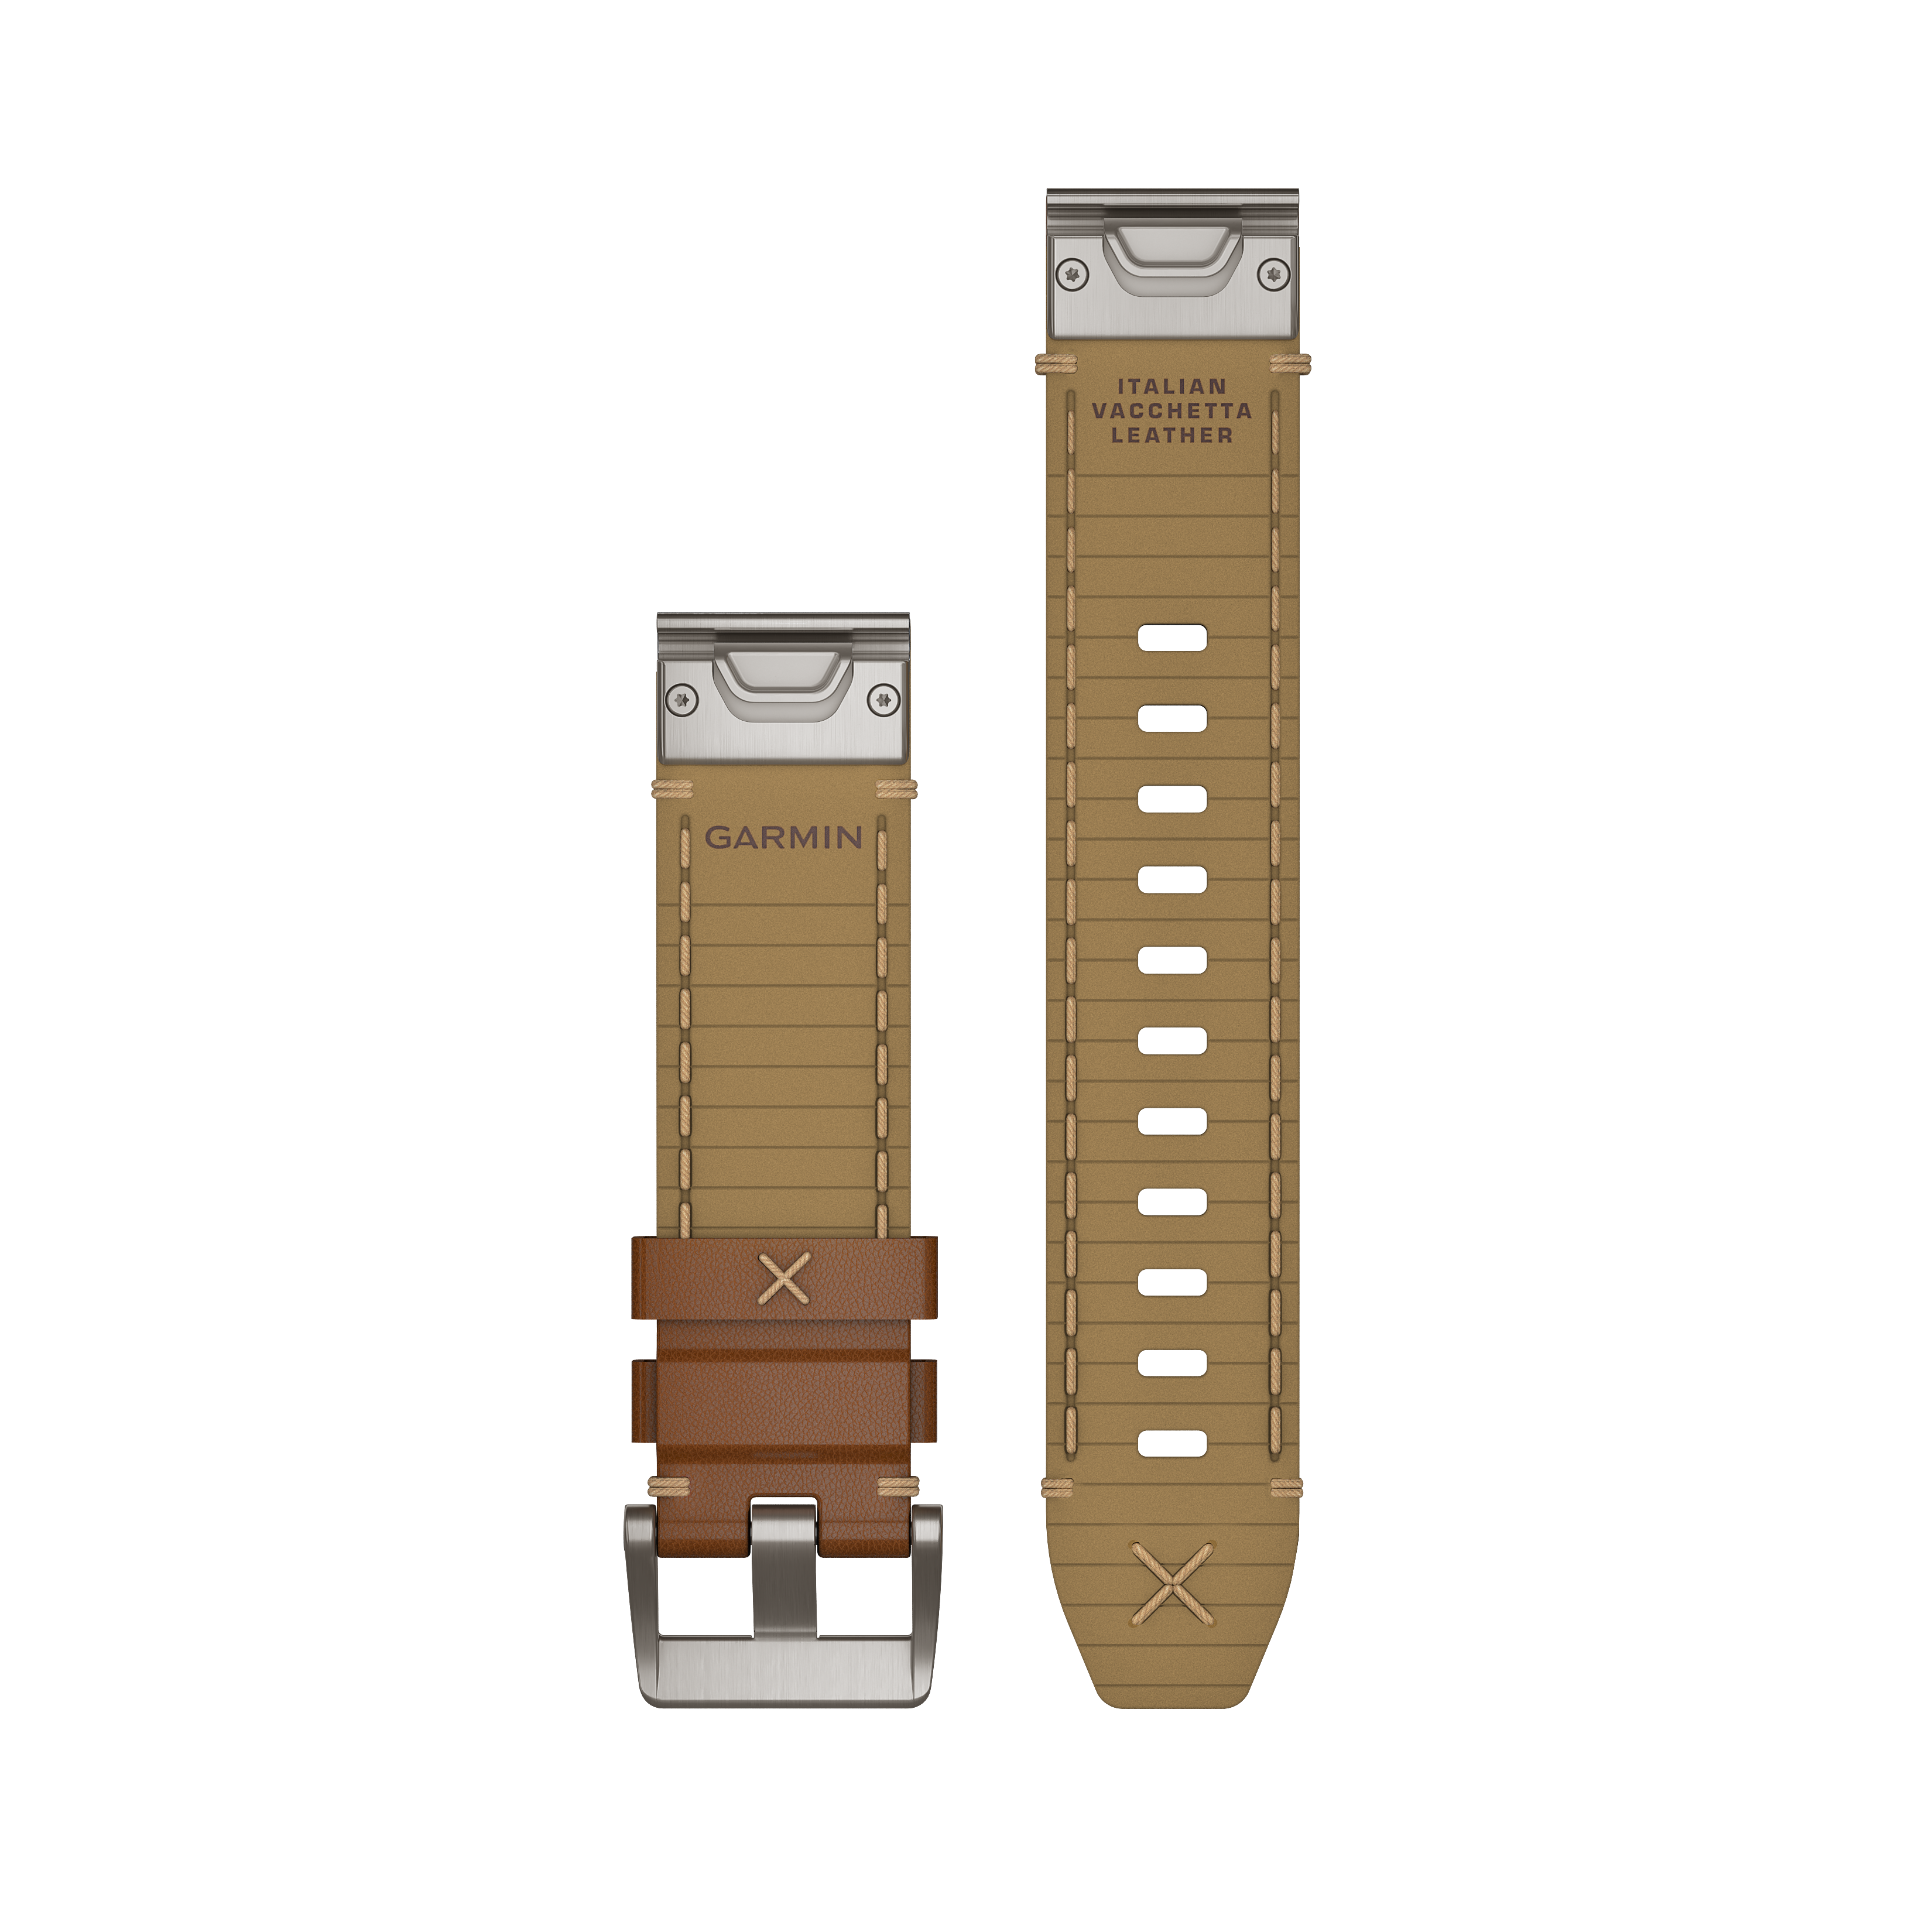 Garmin QuickFit® 22 watch strap, Italian vacchetta leather strap 